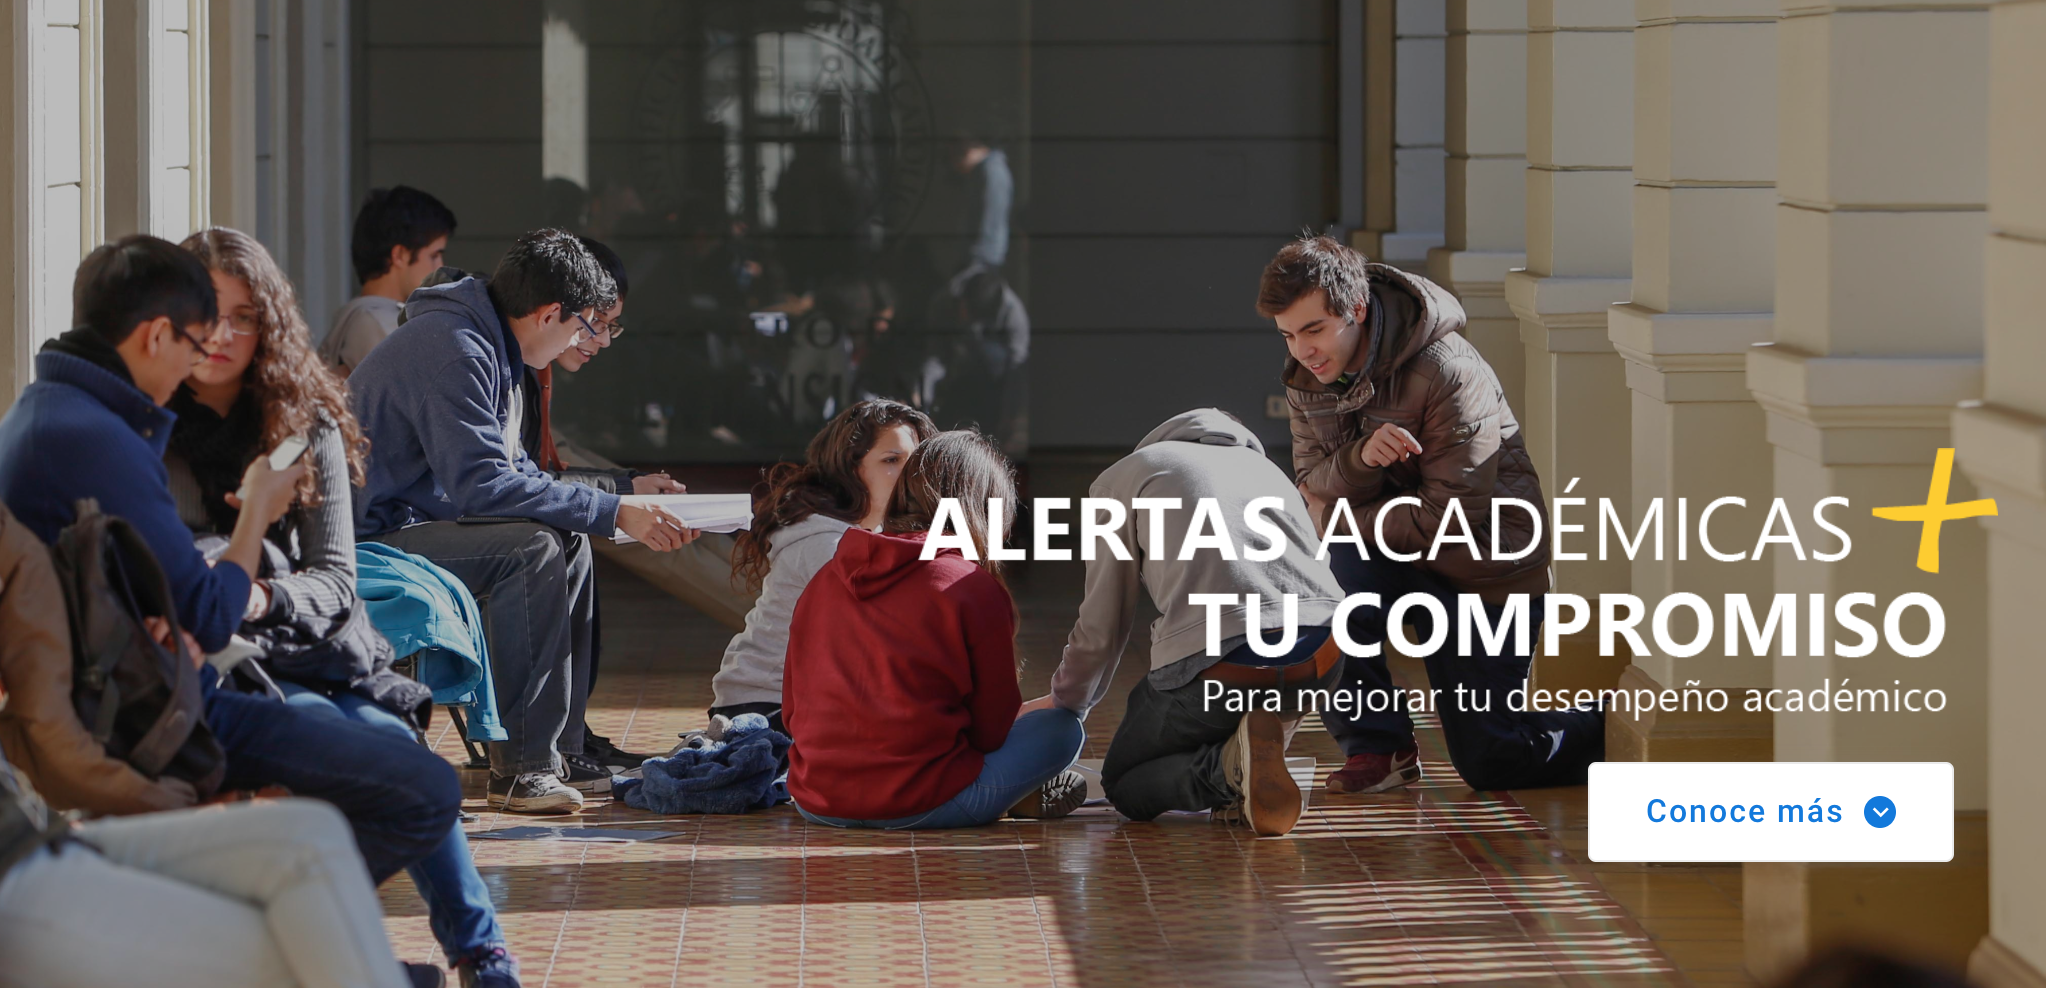 Alertas_academicas.png